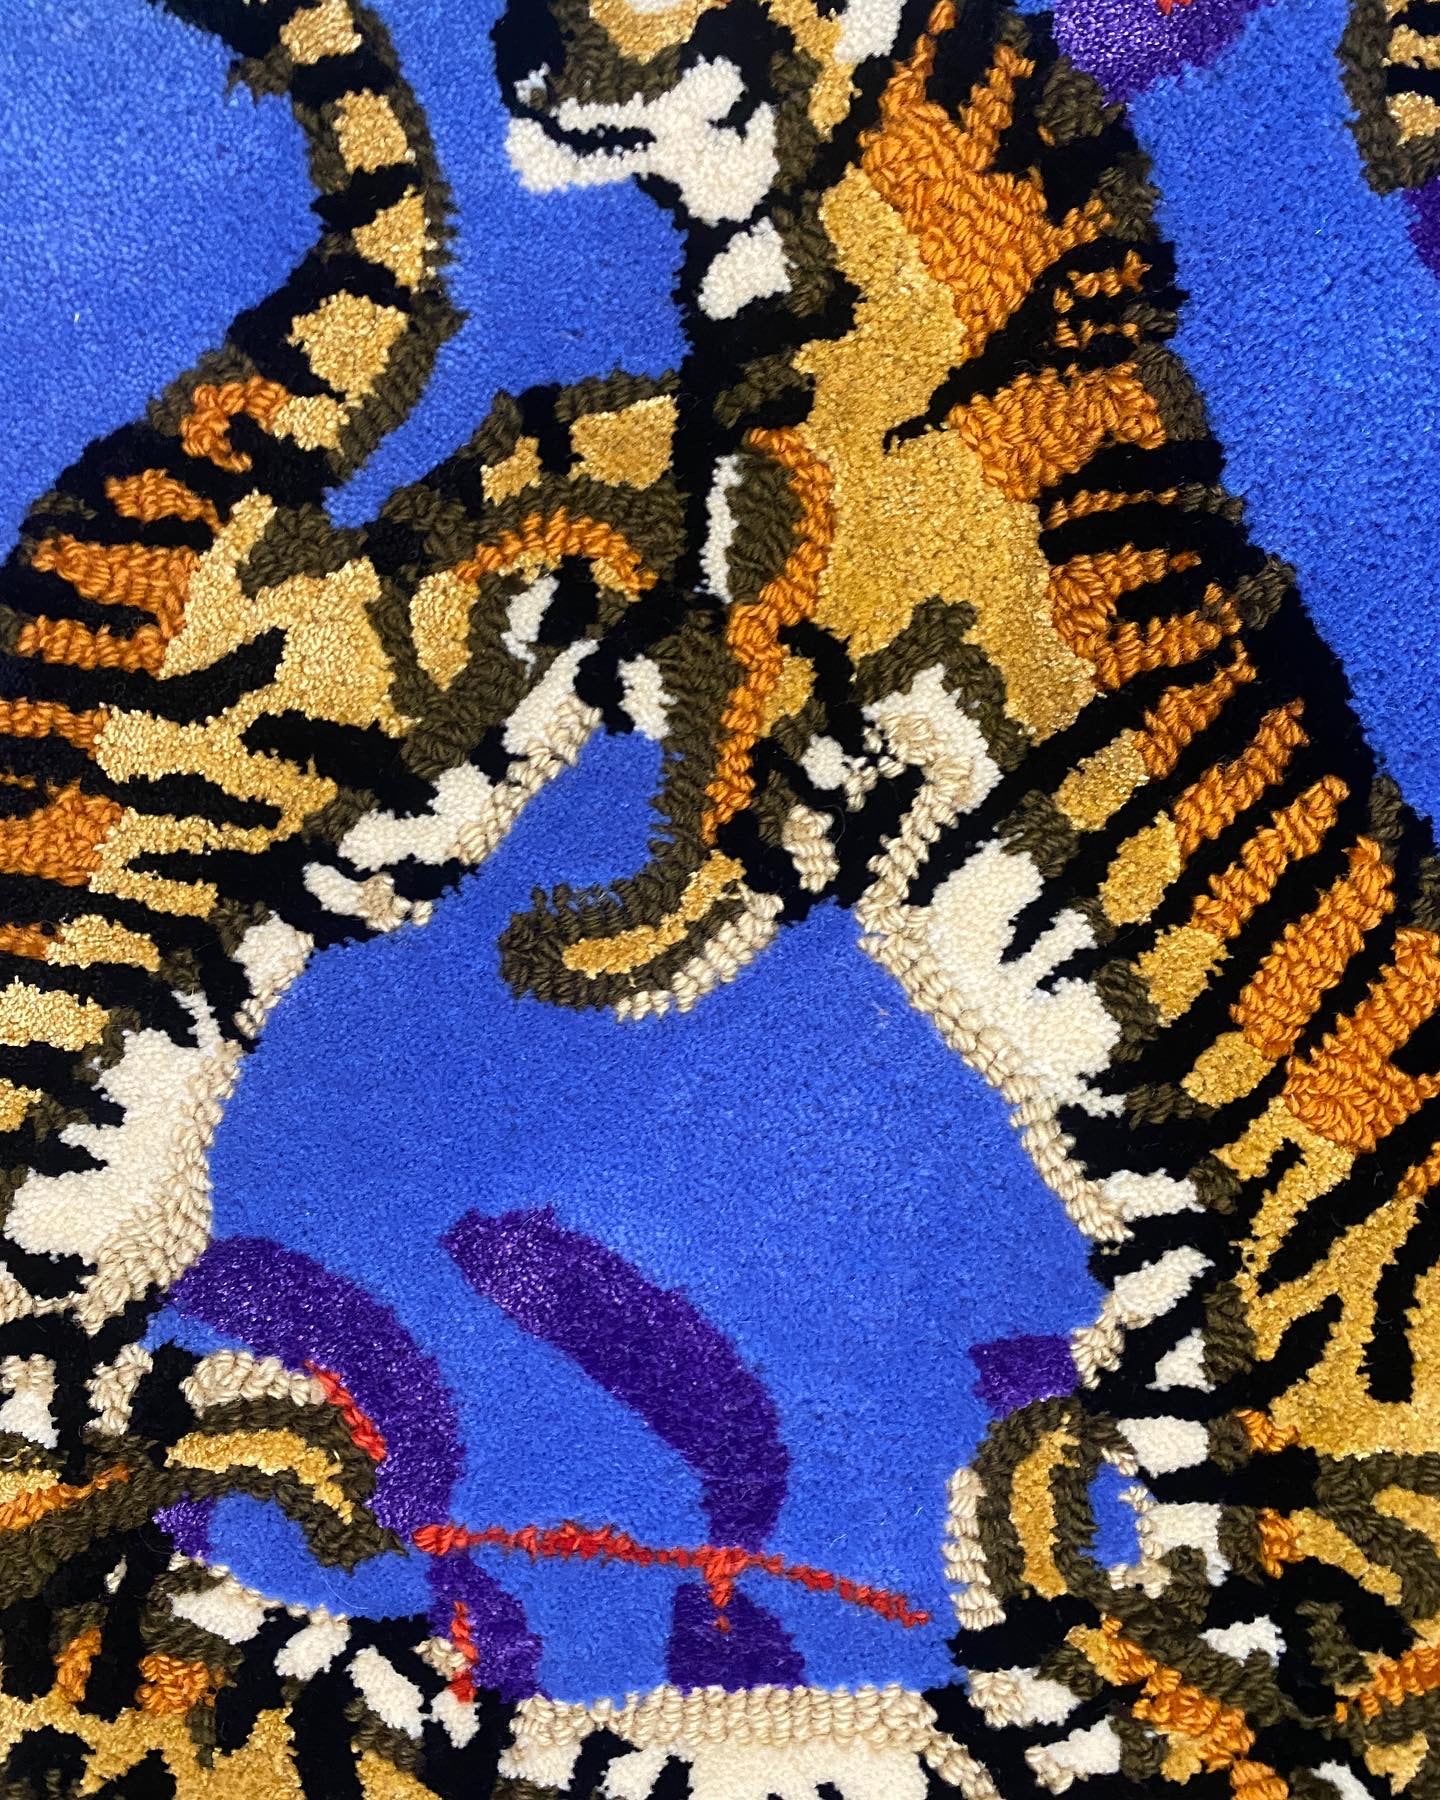 Roaring Tiger Carpet - Periwinkle